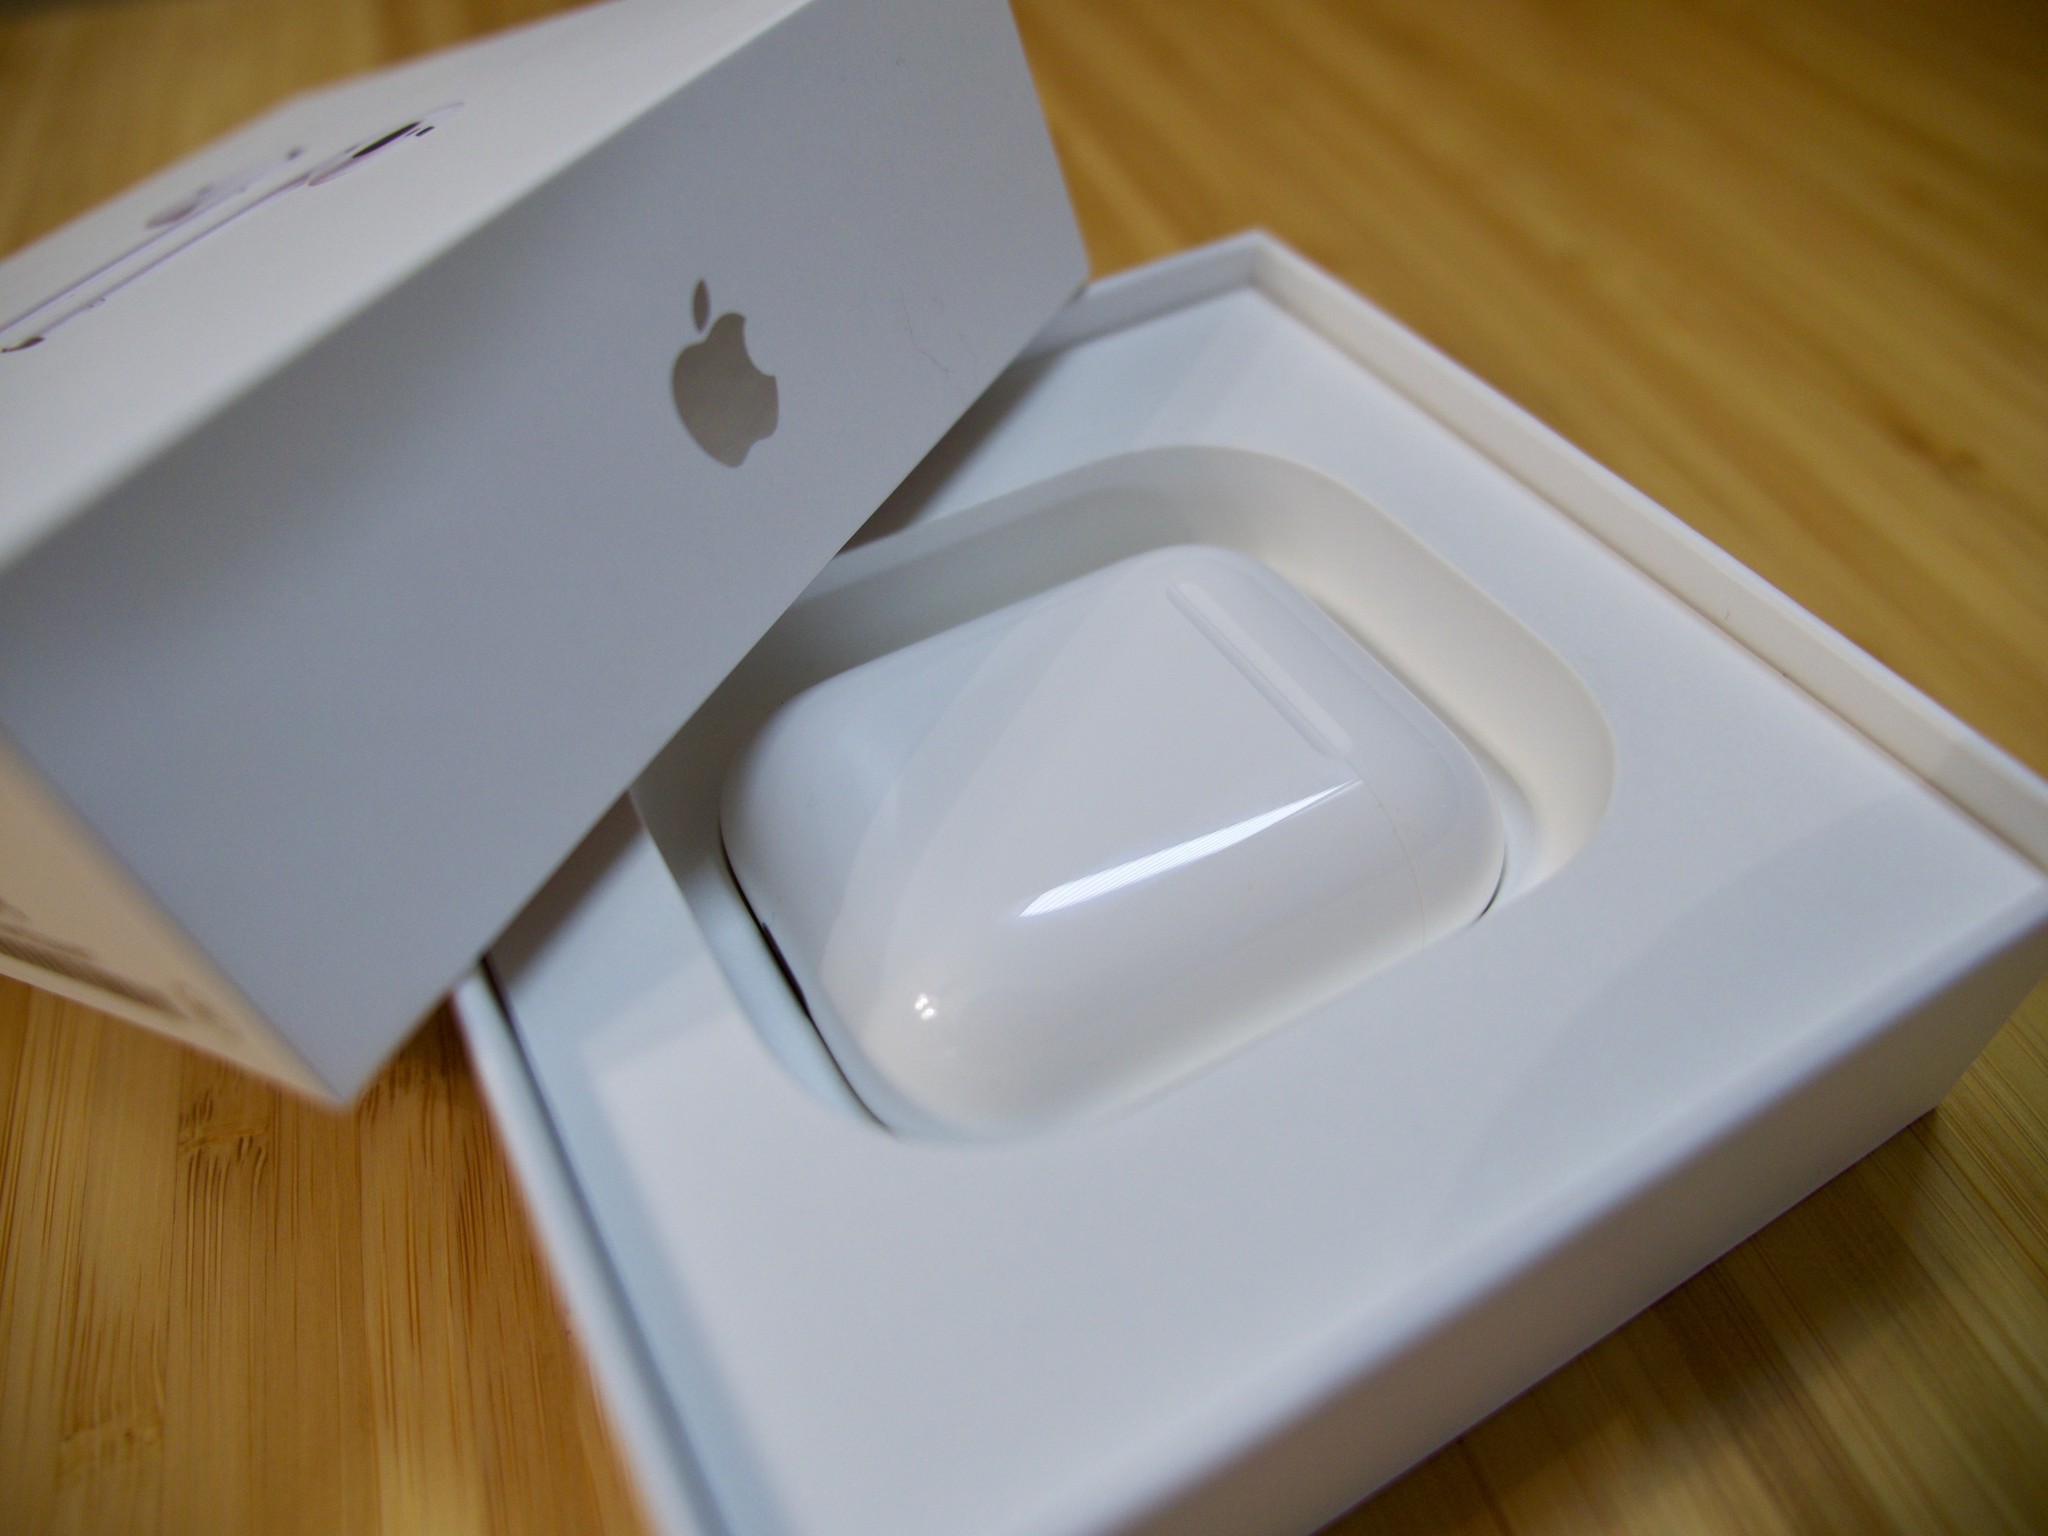 Iphone airpods 1. Apple AIRPODS 2 коробка. Apple AIRPODS Pro 2 коробка. Аирподсы эпл. Apple аирподс коробка.